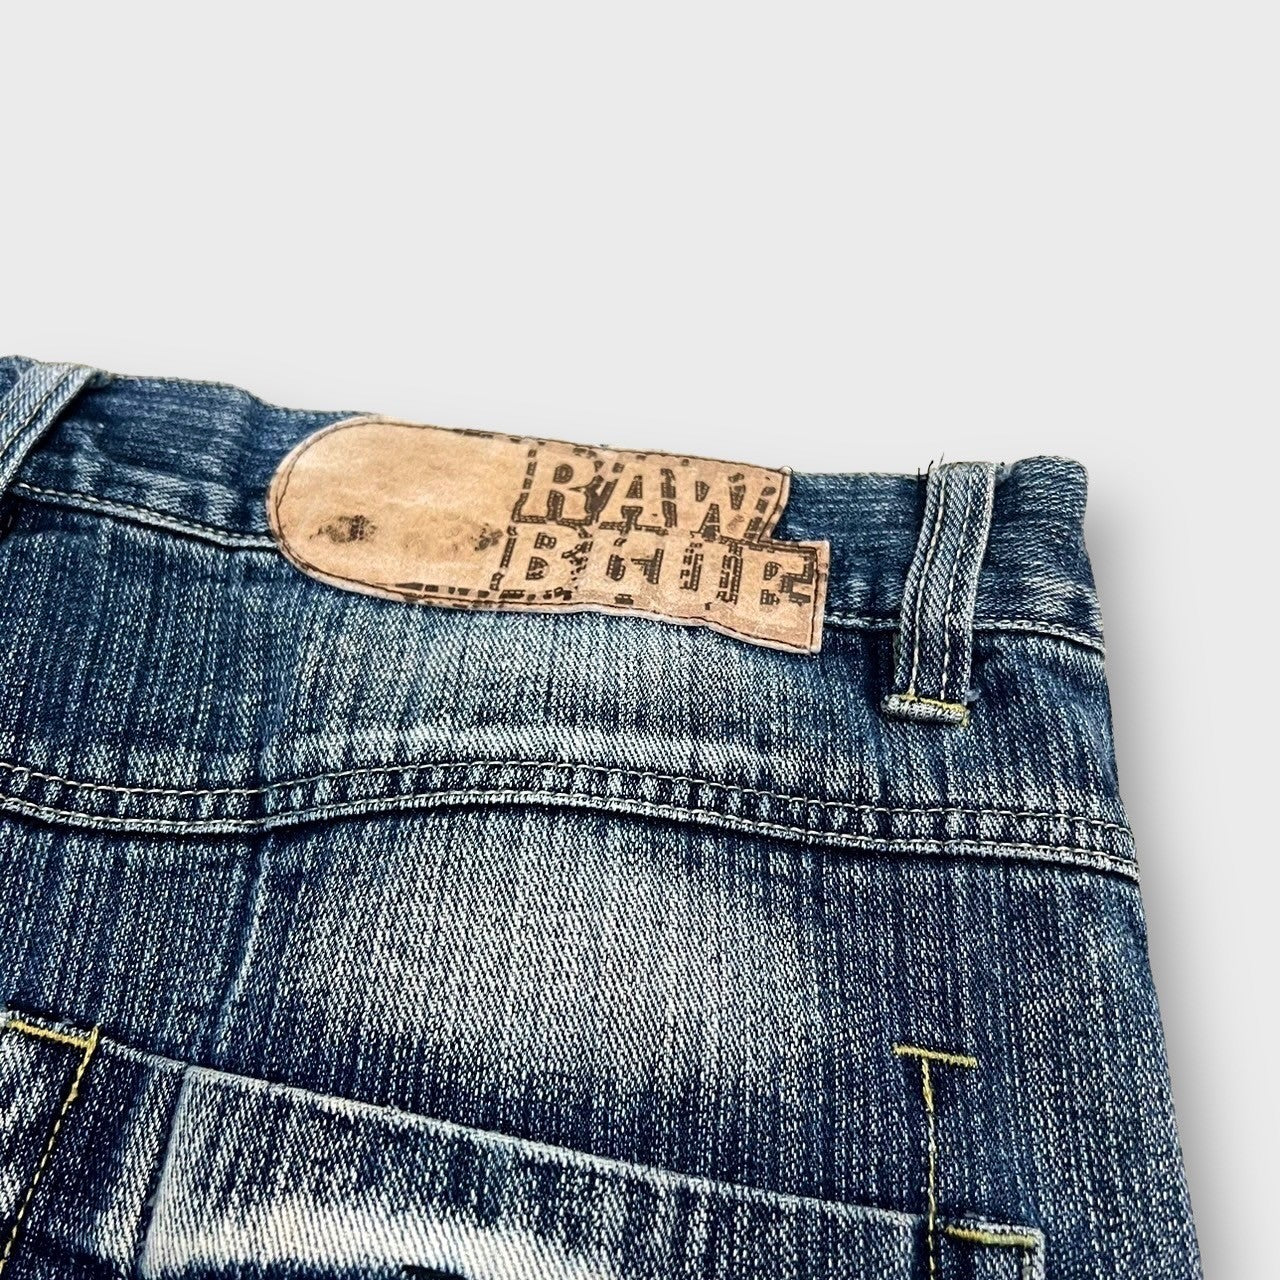 90's "RAW SINCE"
Woshed pattern wide denim pants